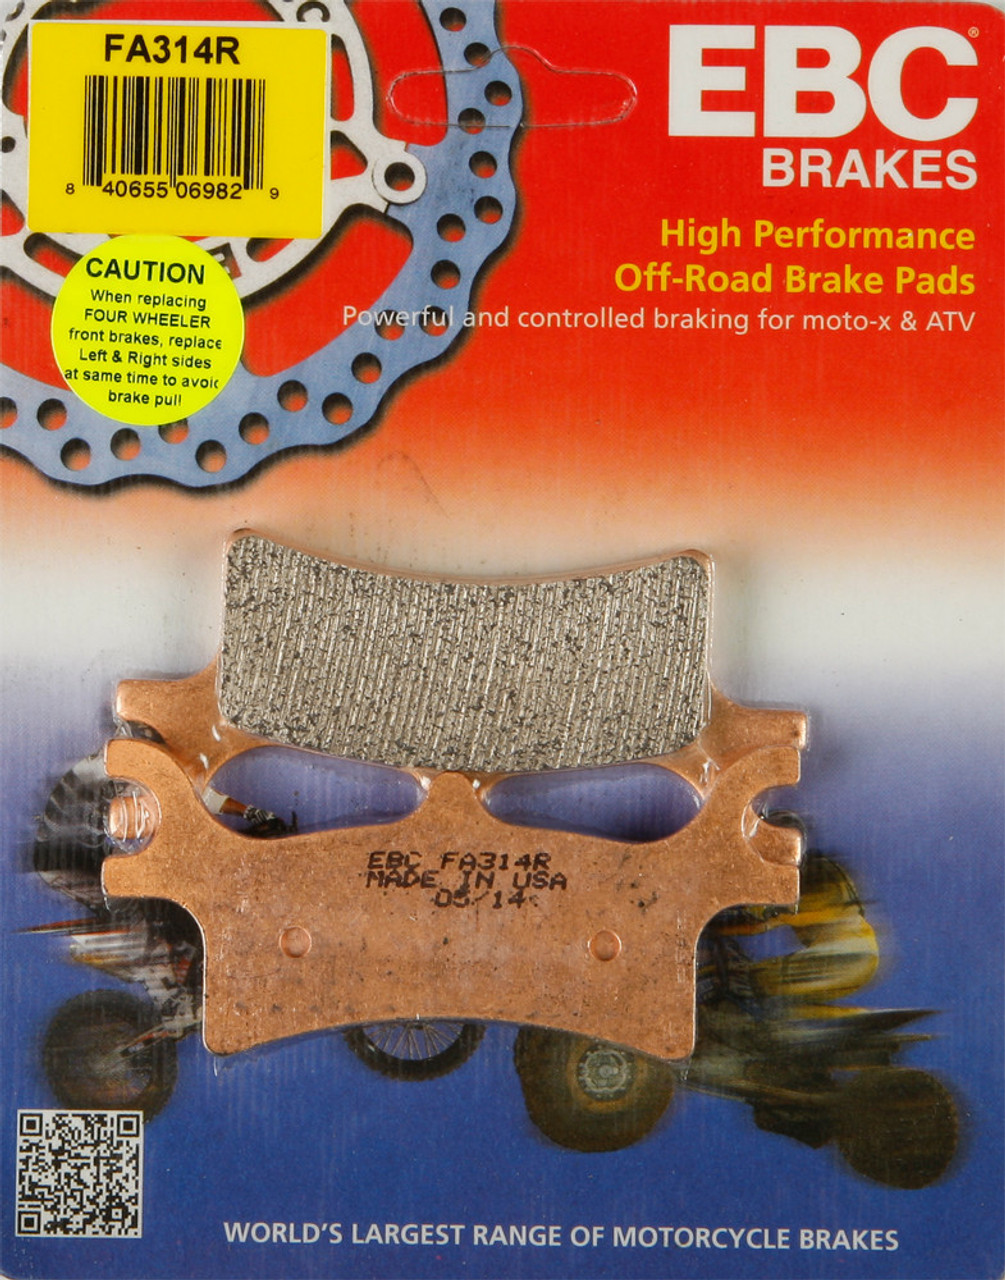 Ebc New Standard Brake Pads, 15-314R